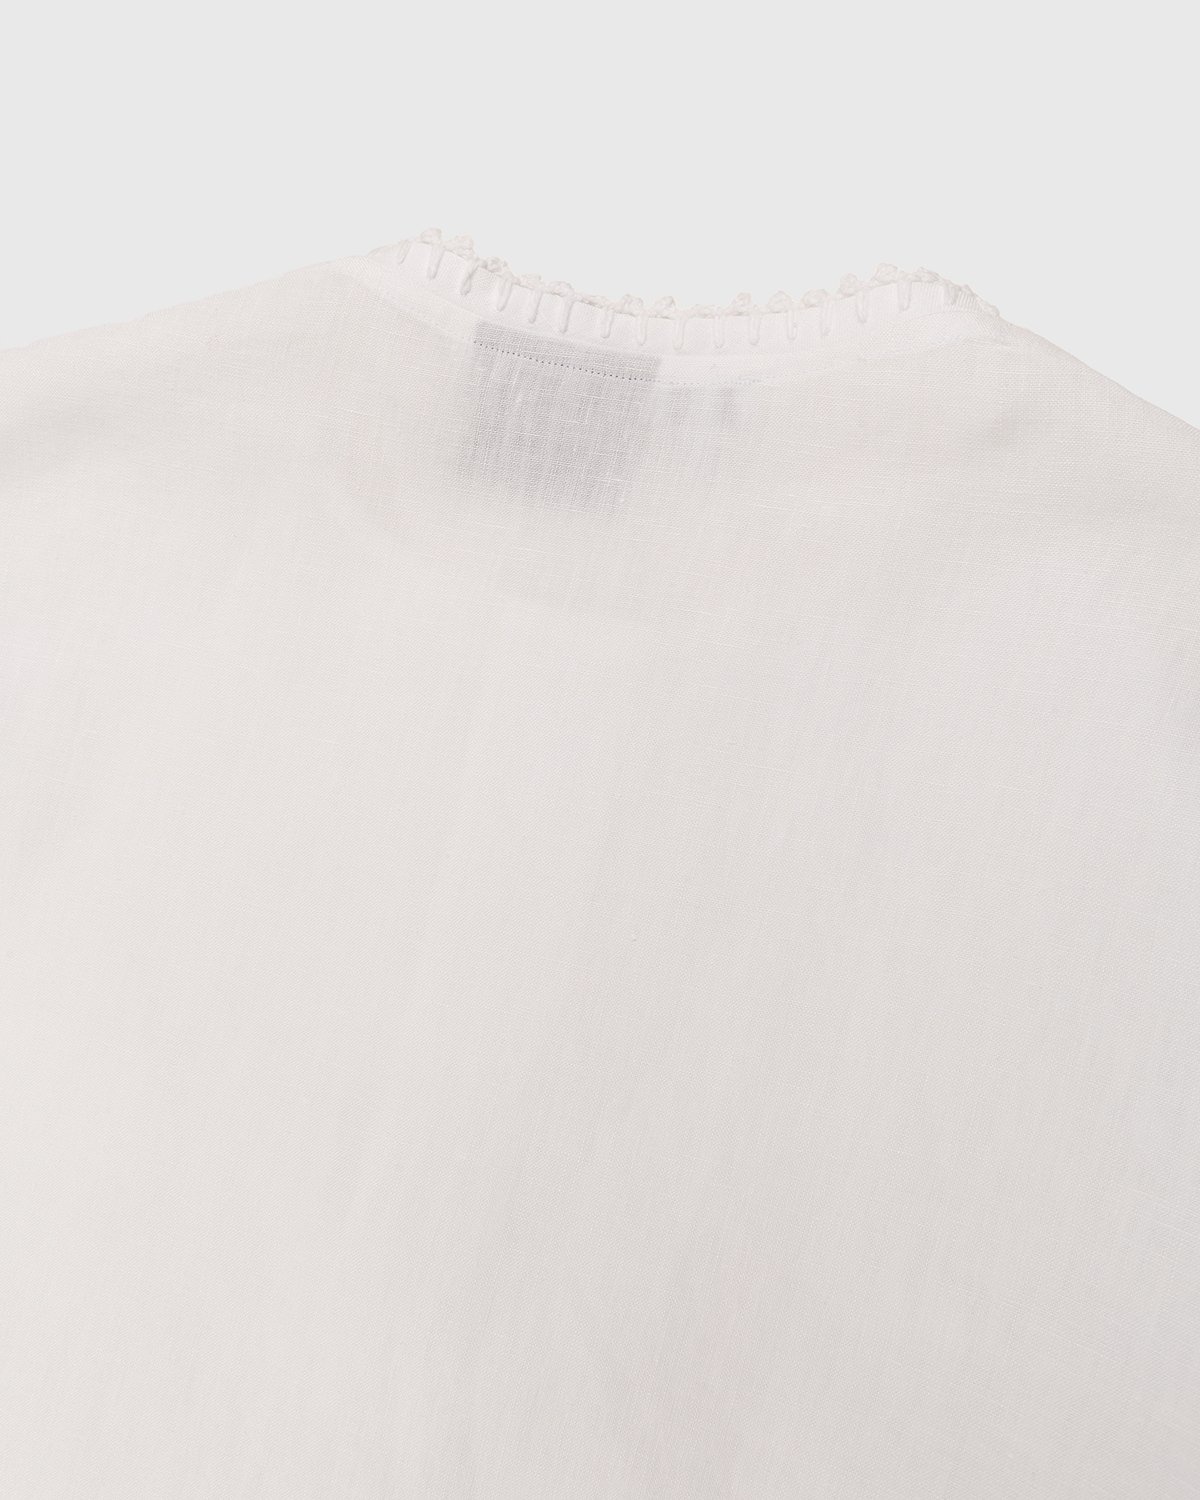 Loewe – Paula's Ibiza Buttoned Pullover Shirt White - Shirts - White - Image 3